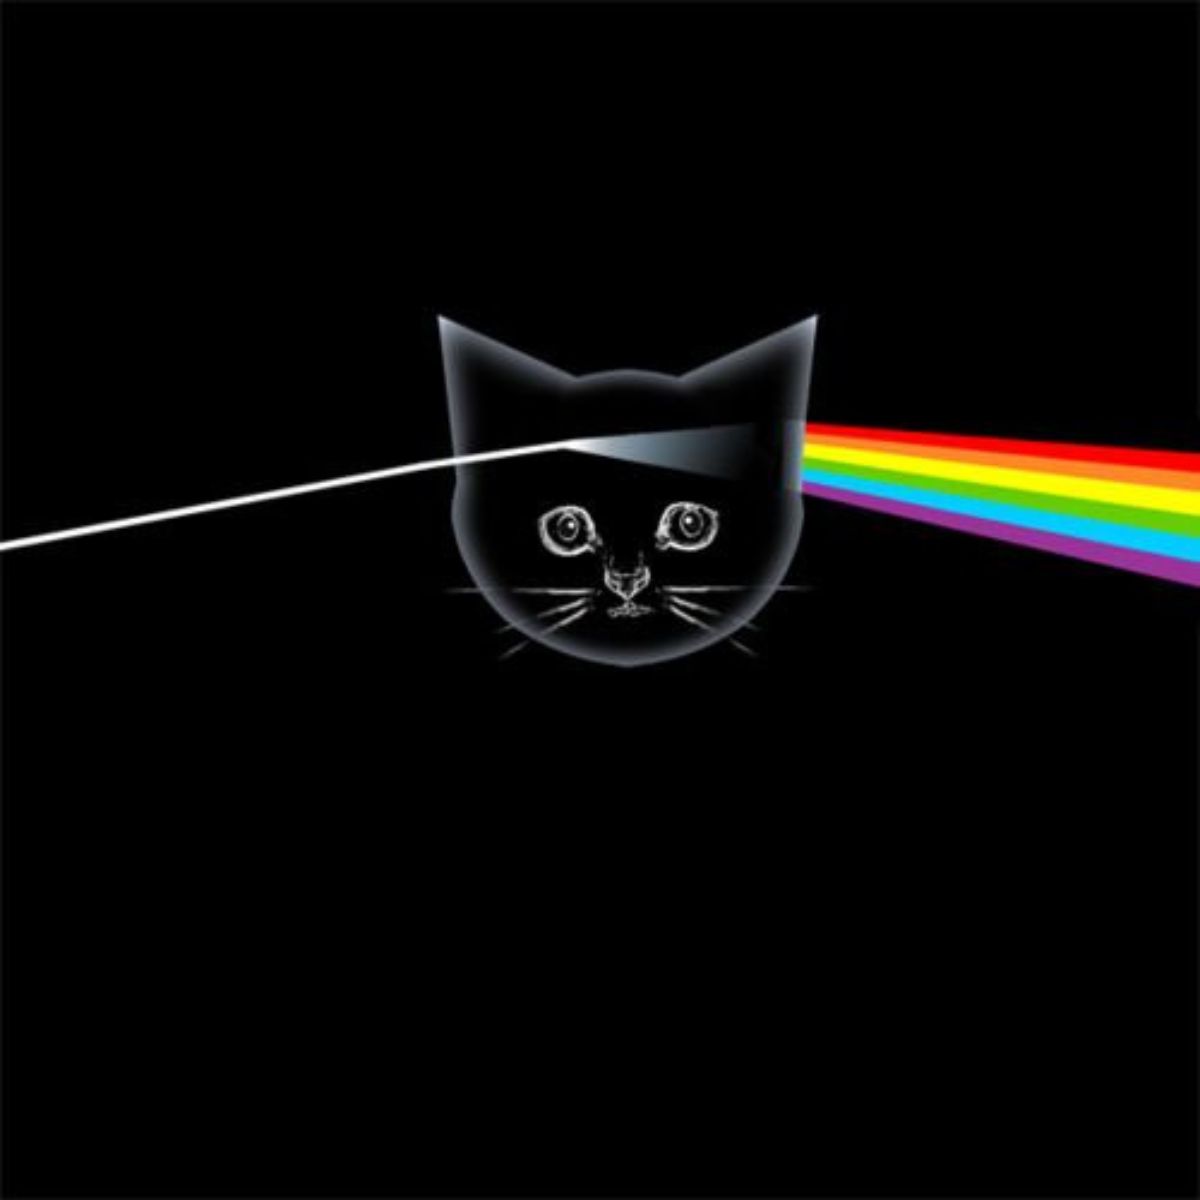 cat version of pink floyd's album cover